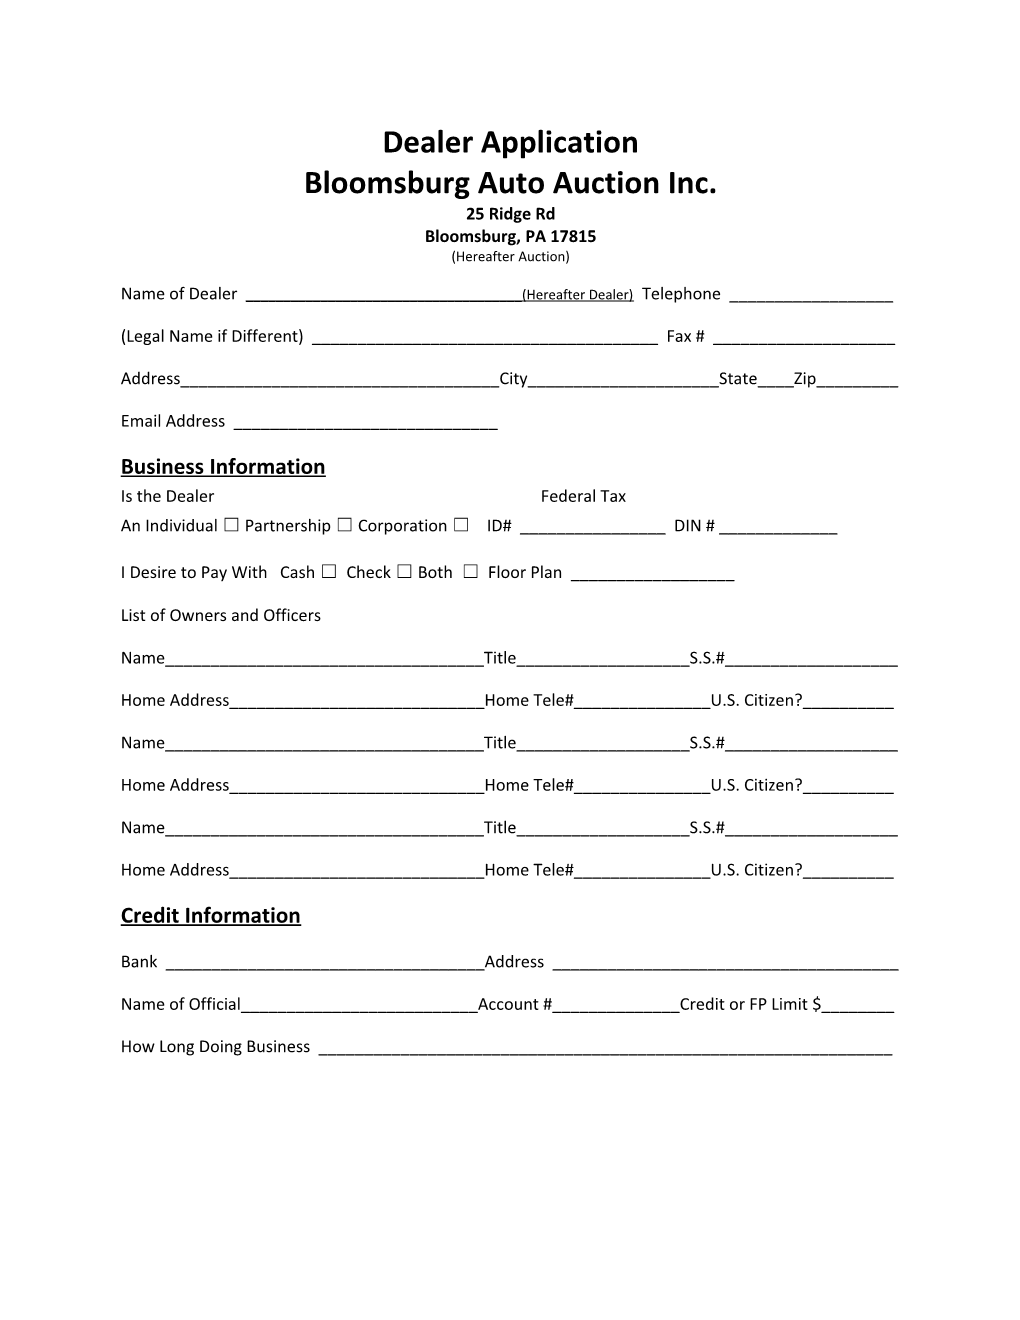 Bloomsburg Auto Auction Inc